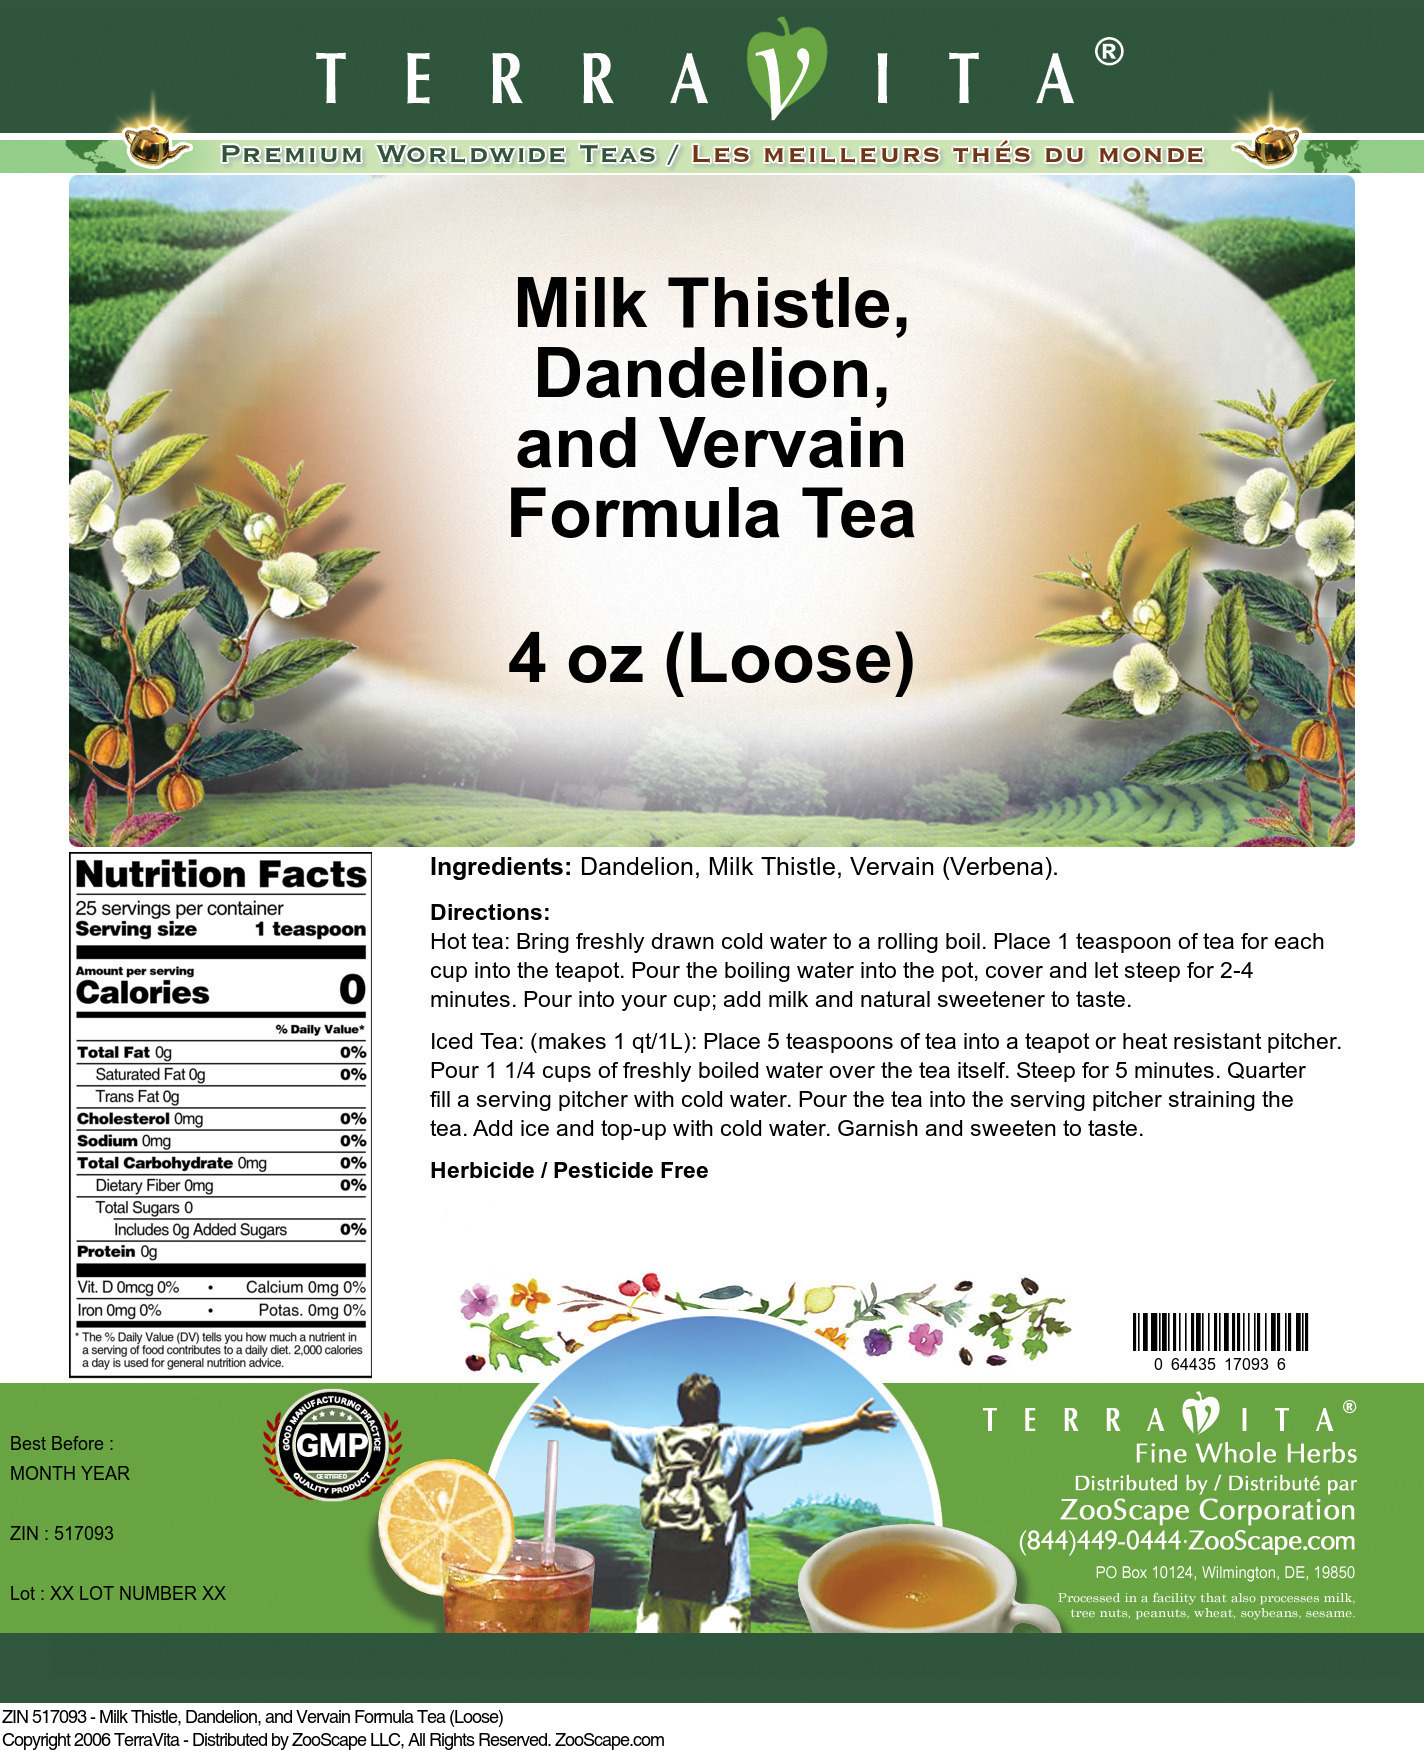 Milk Thistle, Dandelion, and Vervain Formula Tea (Loose) - Label